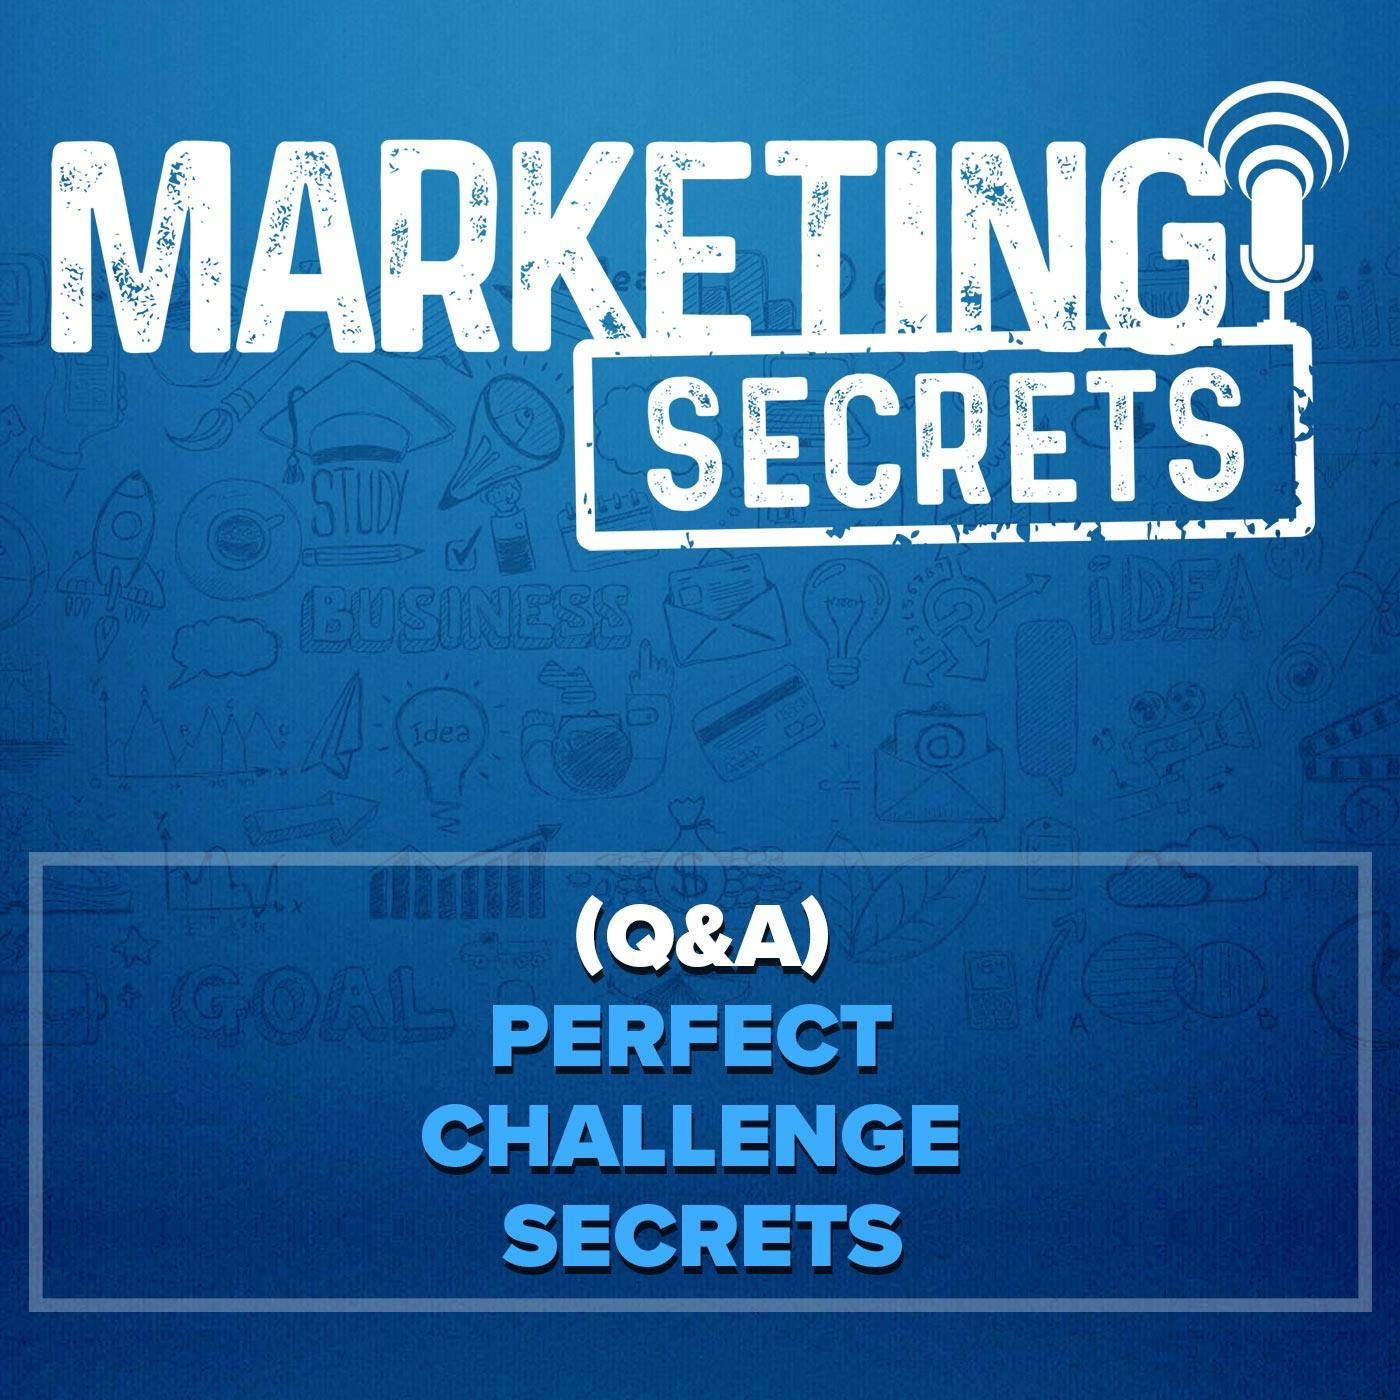 (Q&A) Perfect Challenge Secrets